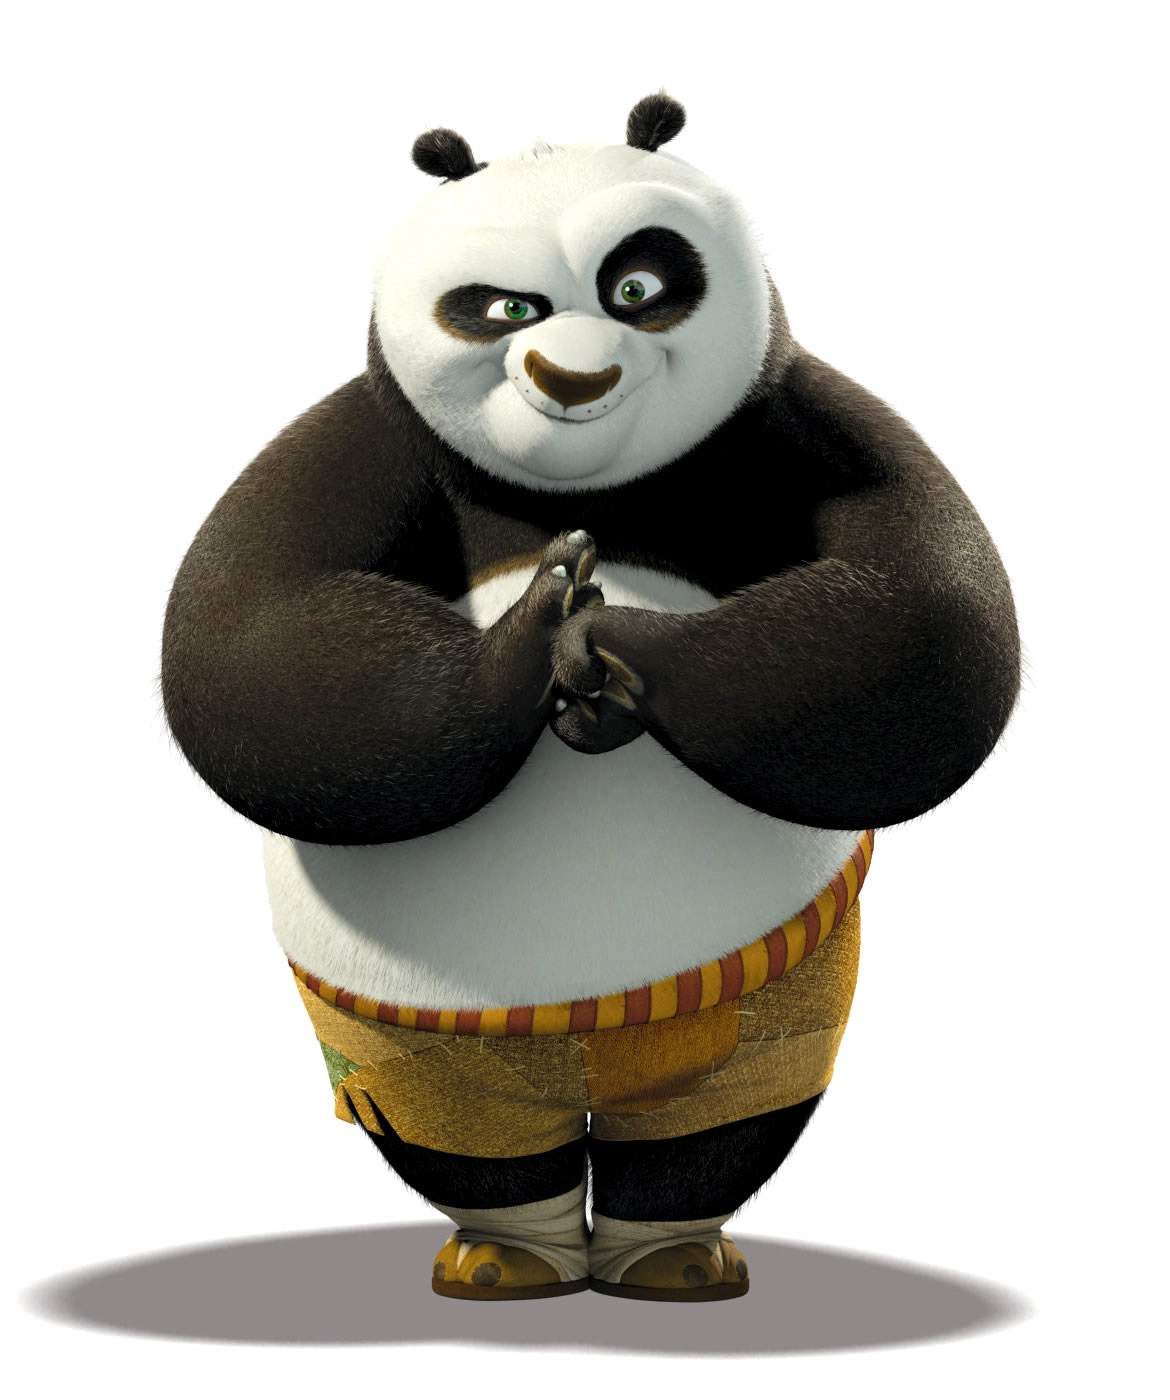 The-kung-fu-panda-image-the-kung-fu-panda-36644993-1170-1400.jpg